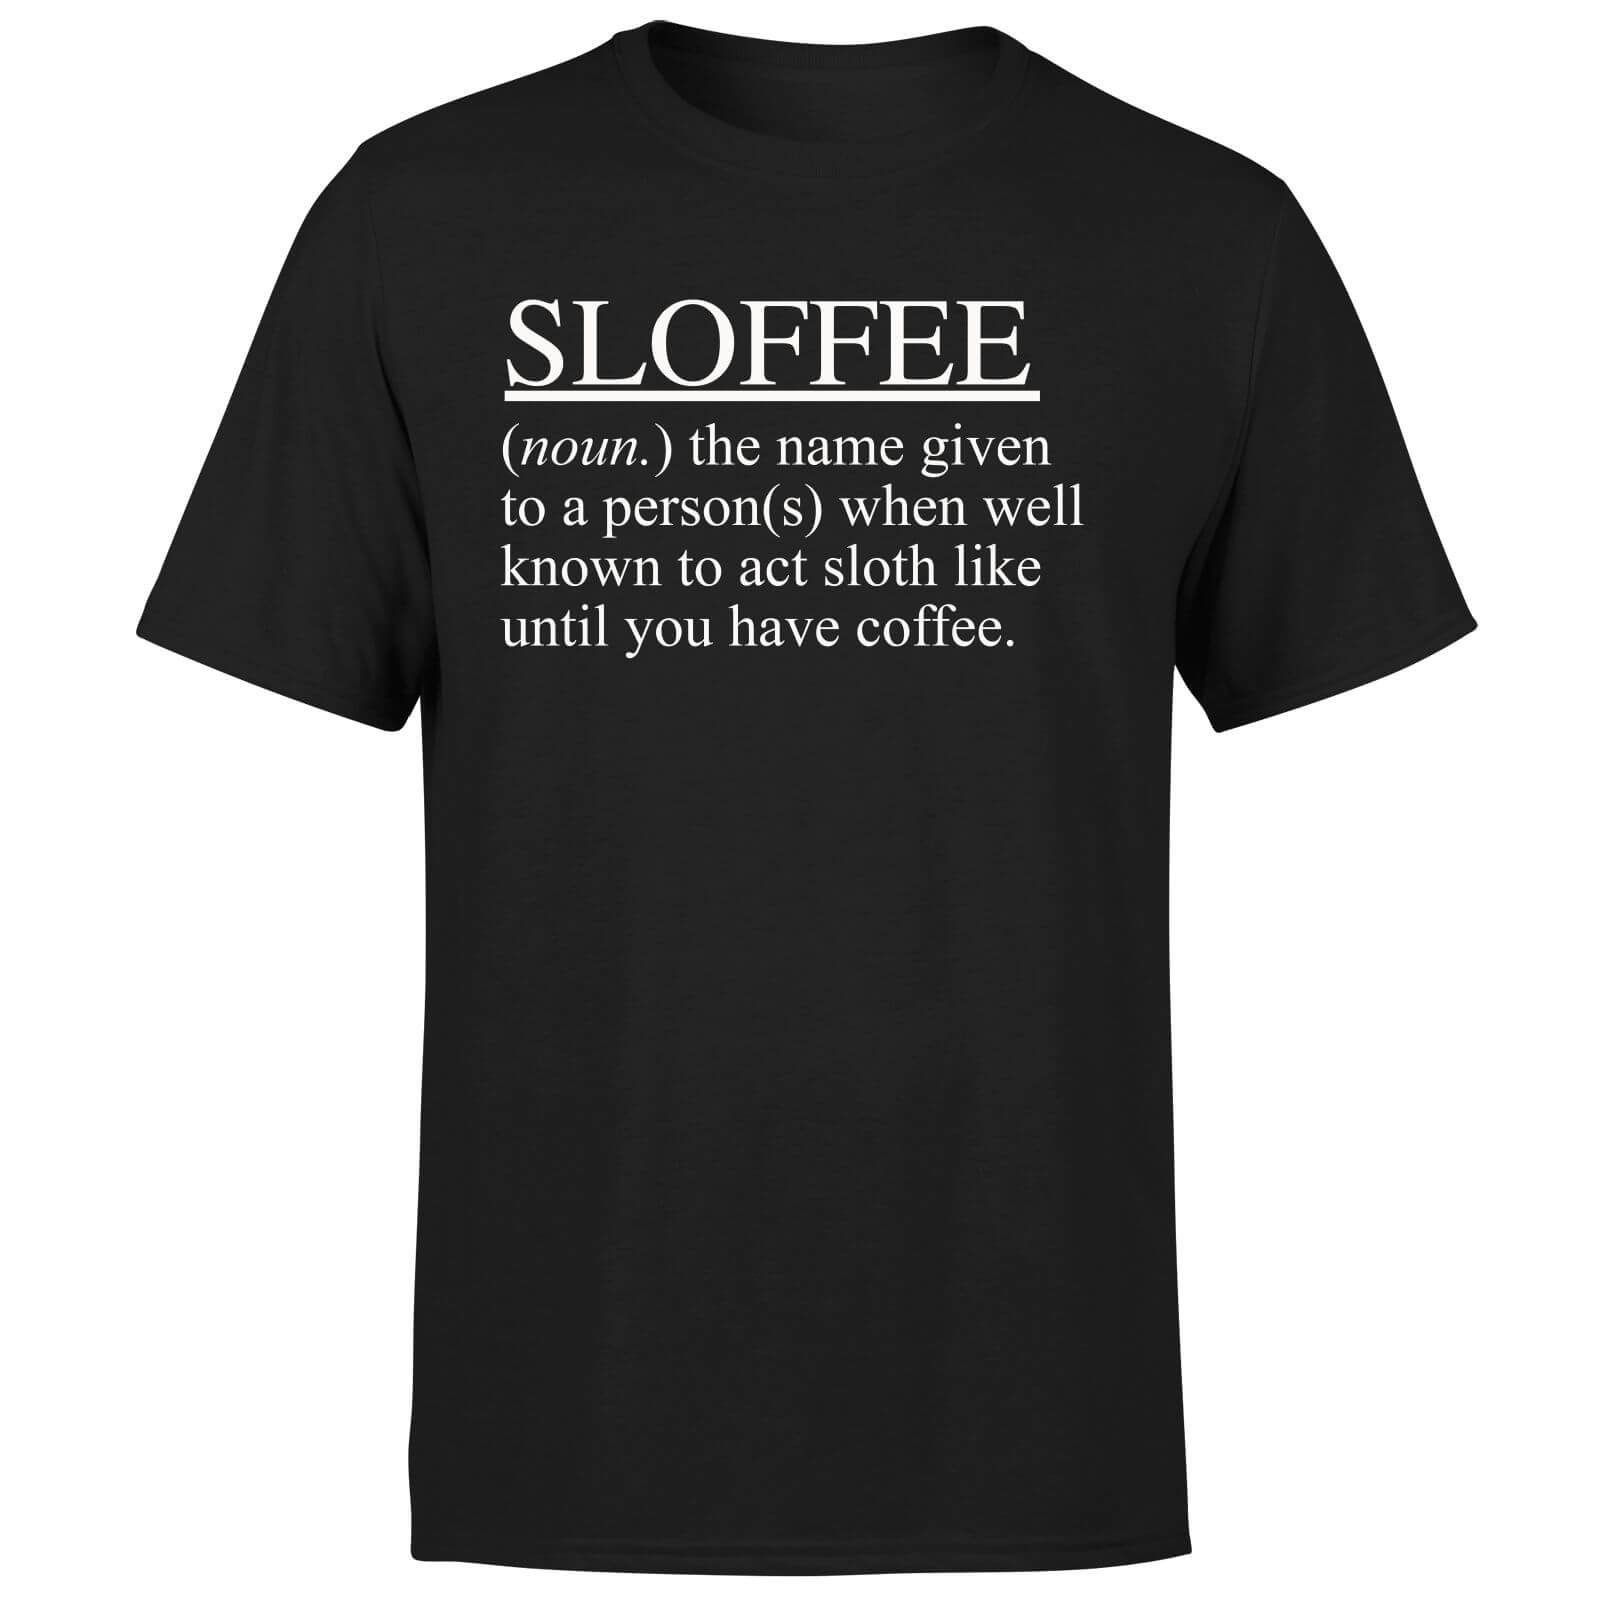 Sloffee T-Shirt - Black - S - Black